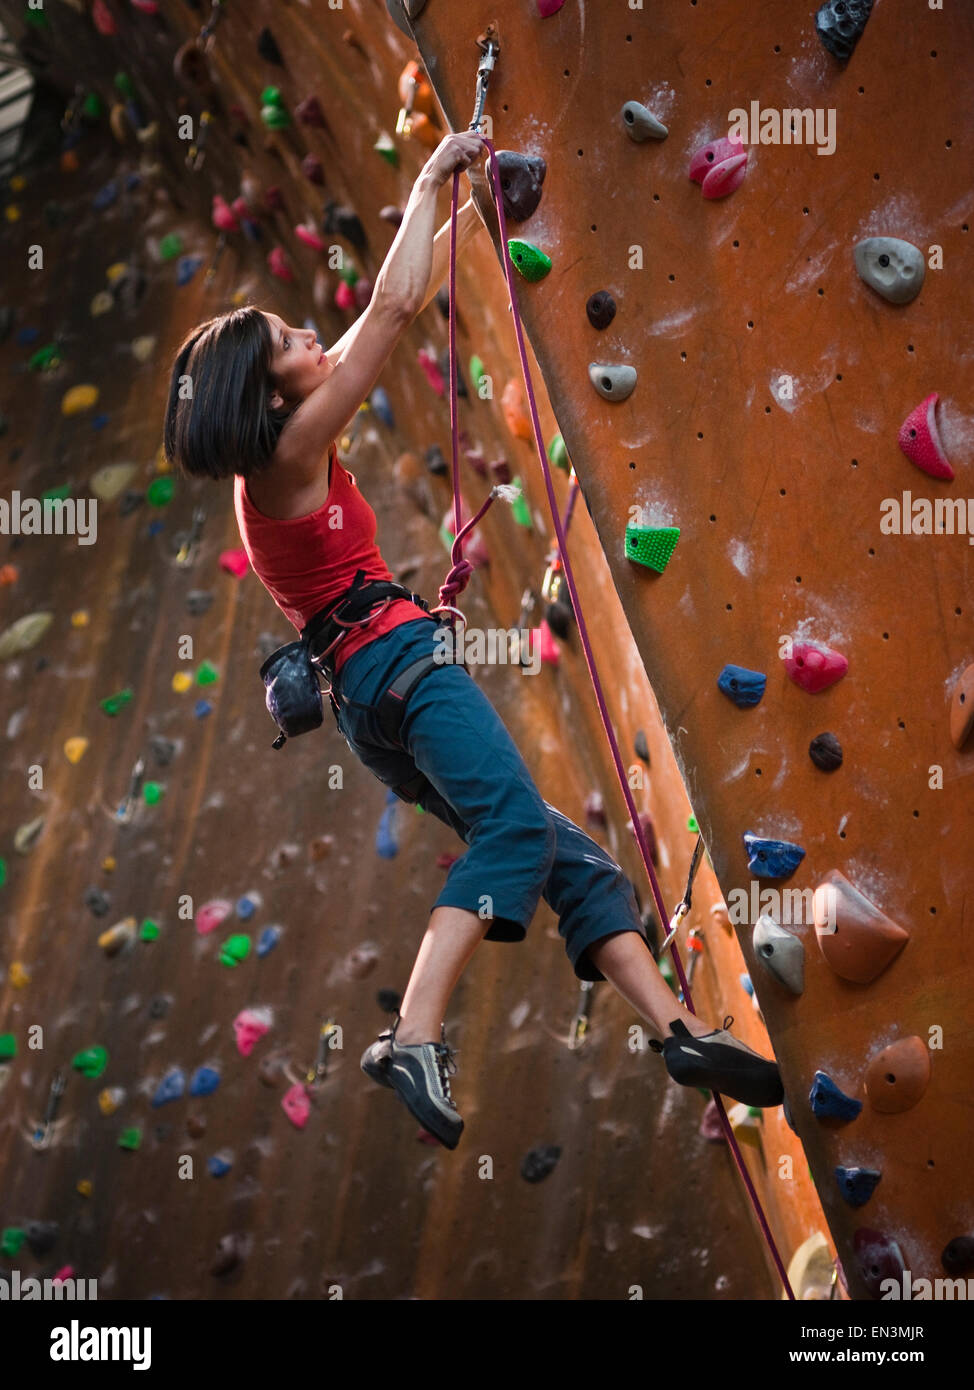 USA,Utah,Sandy,Female rockclimber on indoor climbing wall Stock Photo